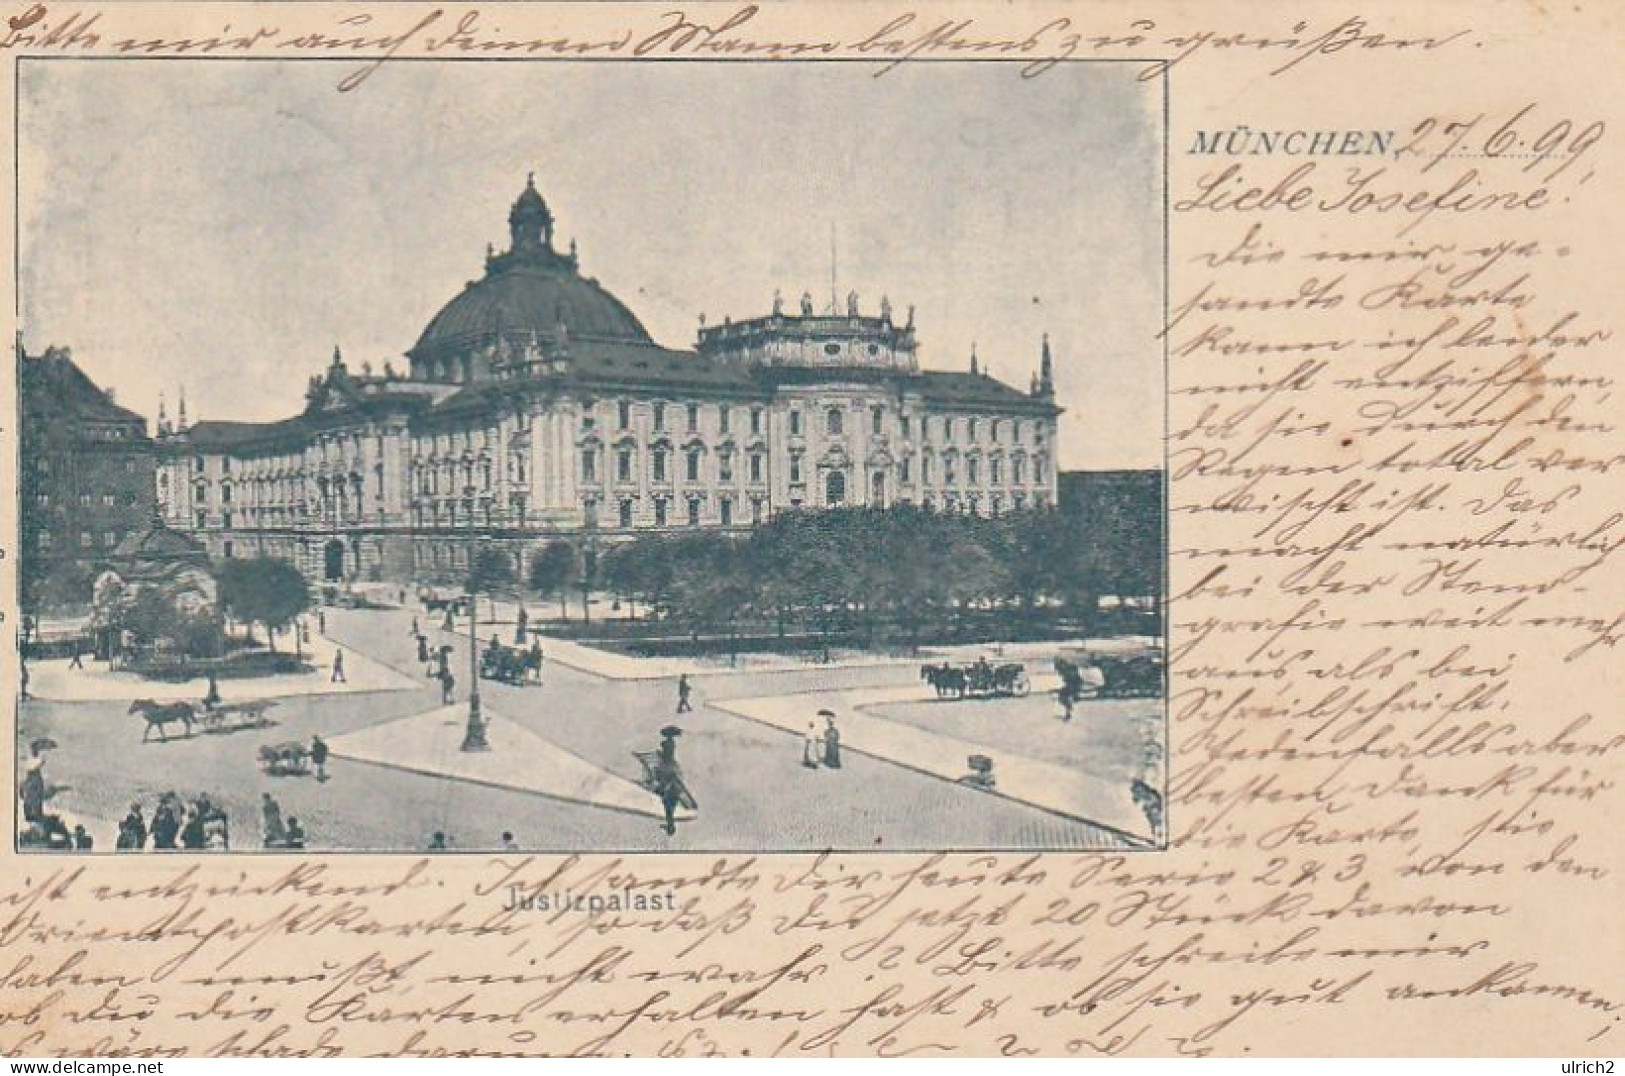 AK München - Justizpalast - 1899  (69521) - Muenchen